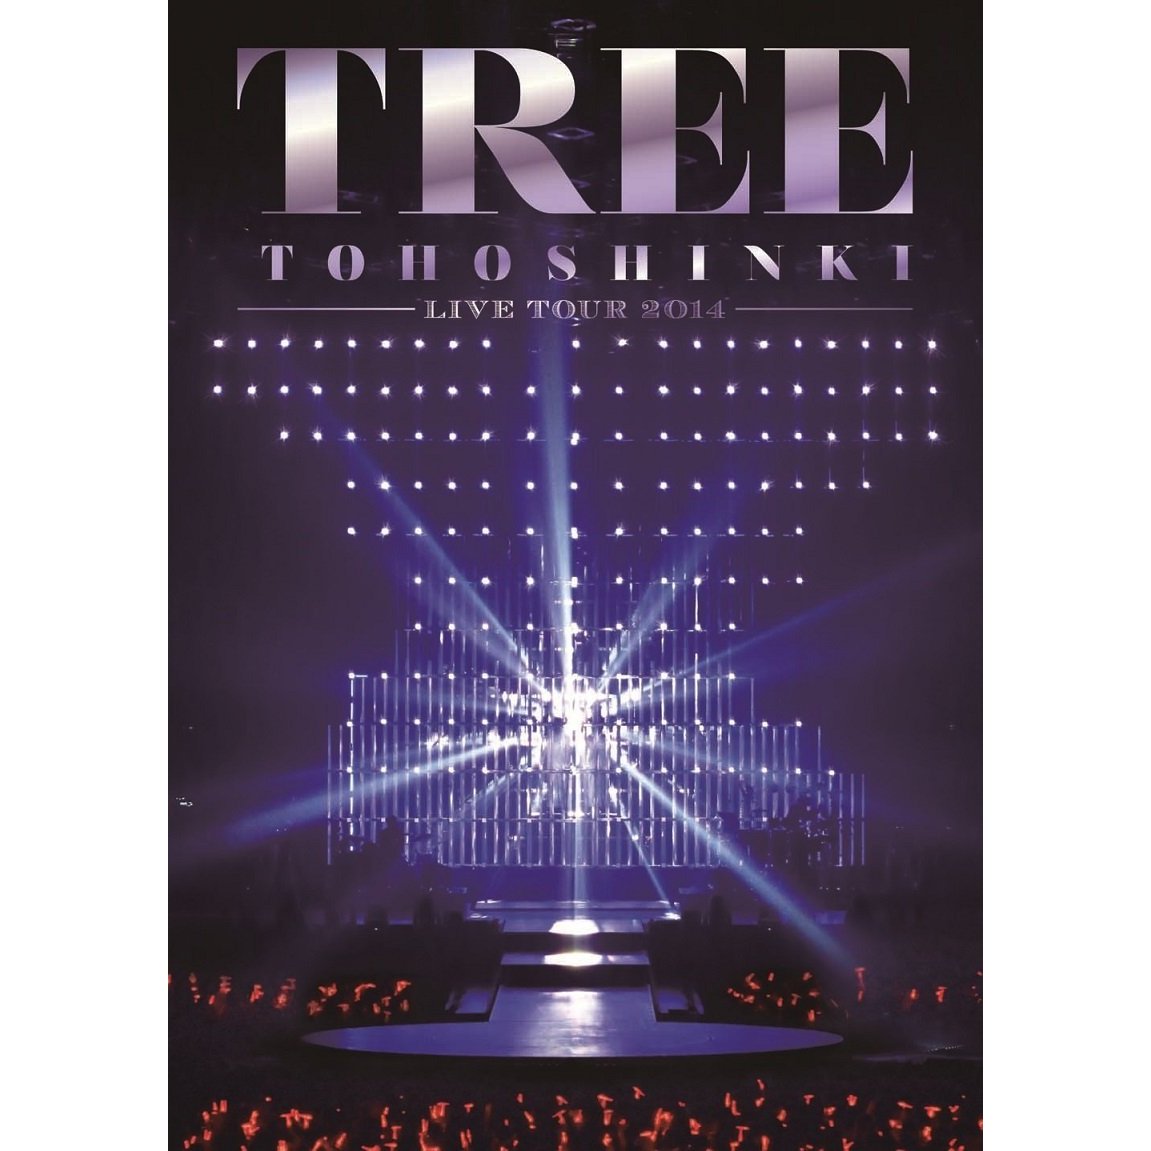 DVD 東方神起 TOHOSHINKI LIVE TOUR 2014 TREE - ミュージック